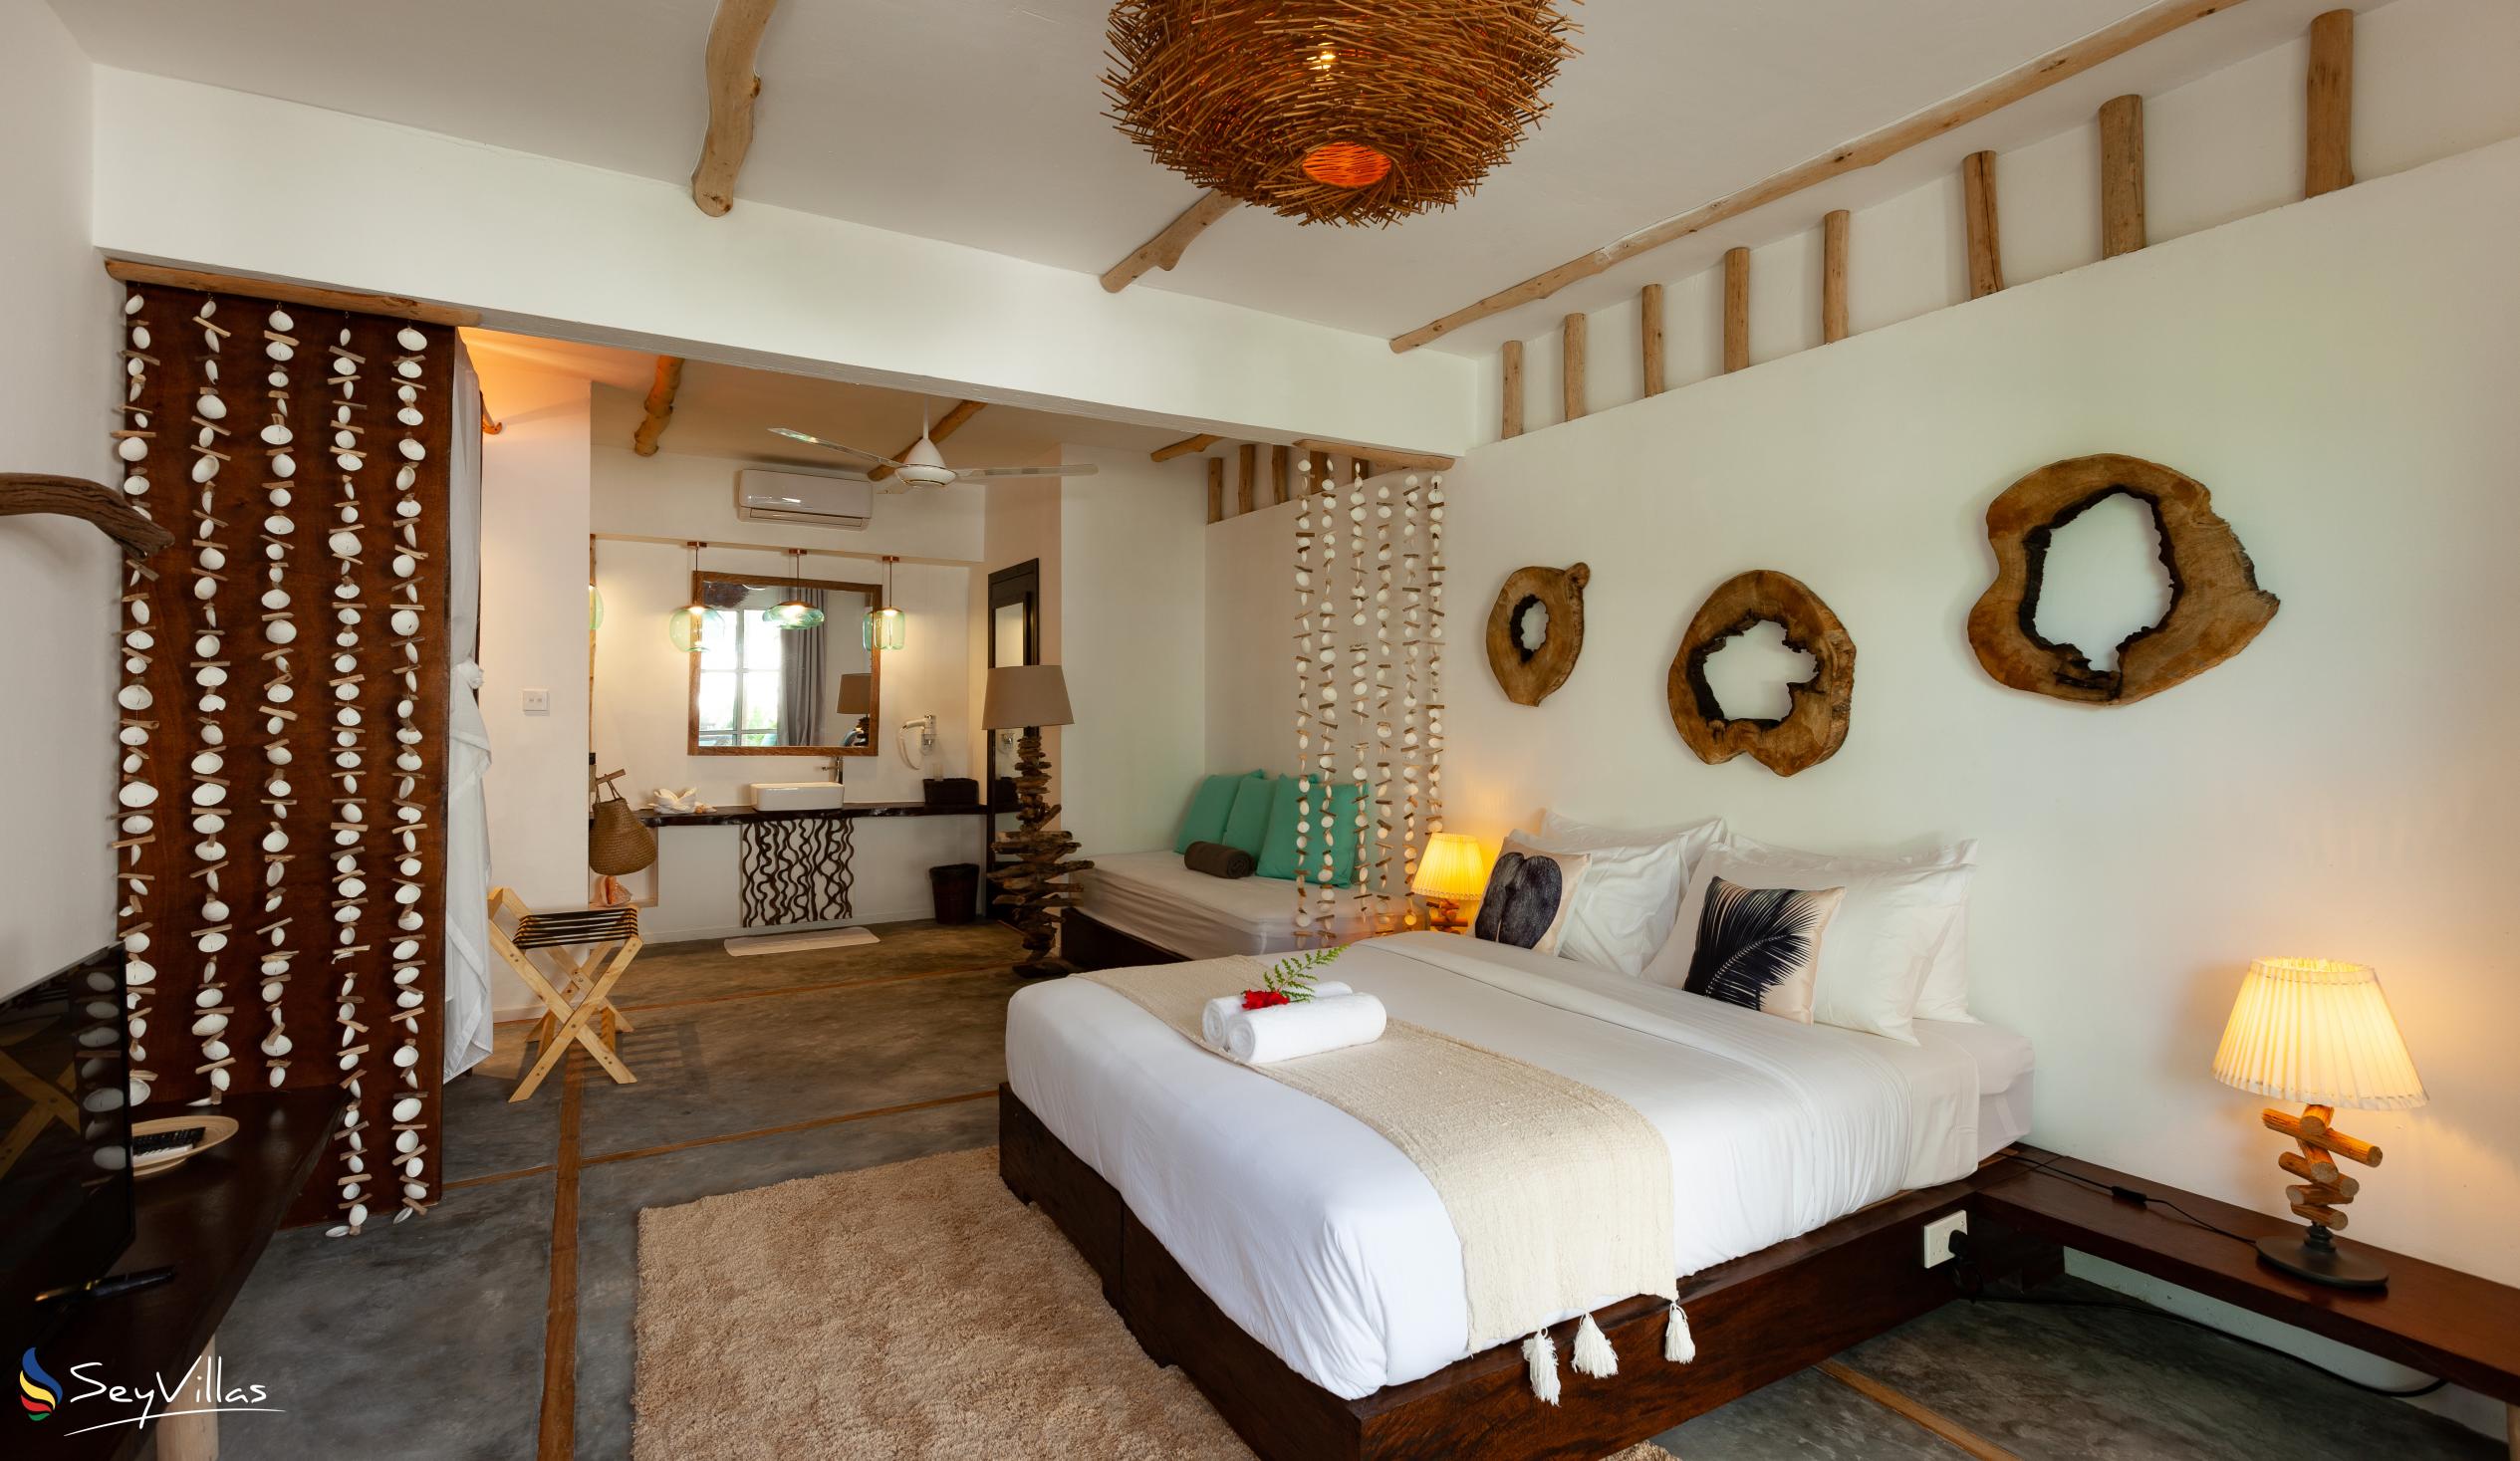 Photo 114: Bliss Hotel Praslin - Beach House - Beach Garden Room - Praslin (Seychelles)